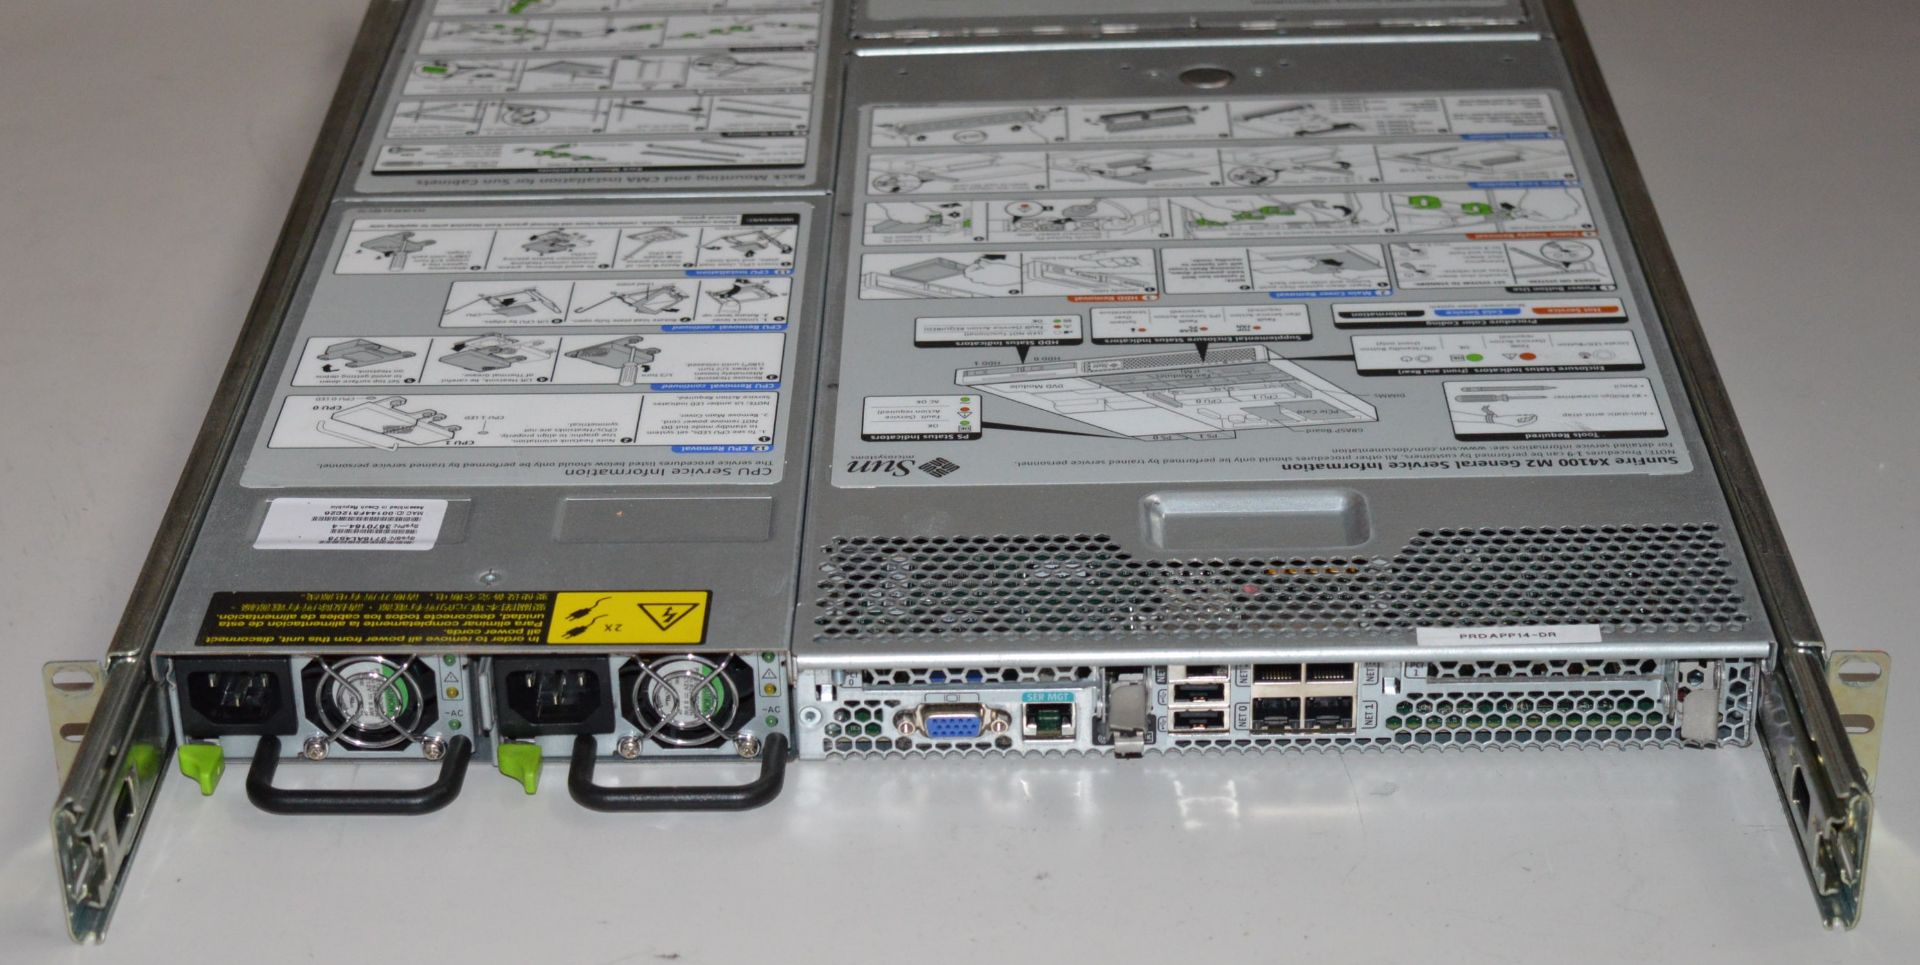 1 x Sun Fire X4100 M2 Server - 2nd Gen Opteron 2220 2.8 GHz Dual-Core - 8 GB - Rack-mountable 1U - - Image 4 of 5